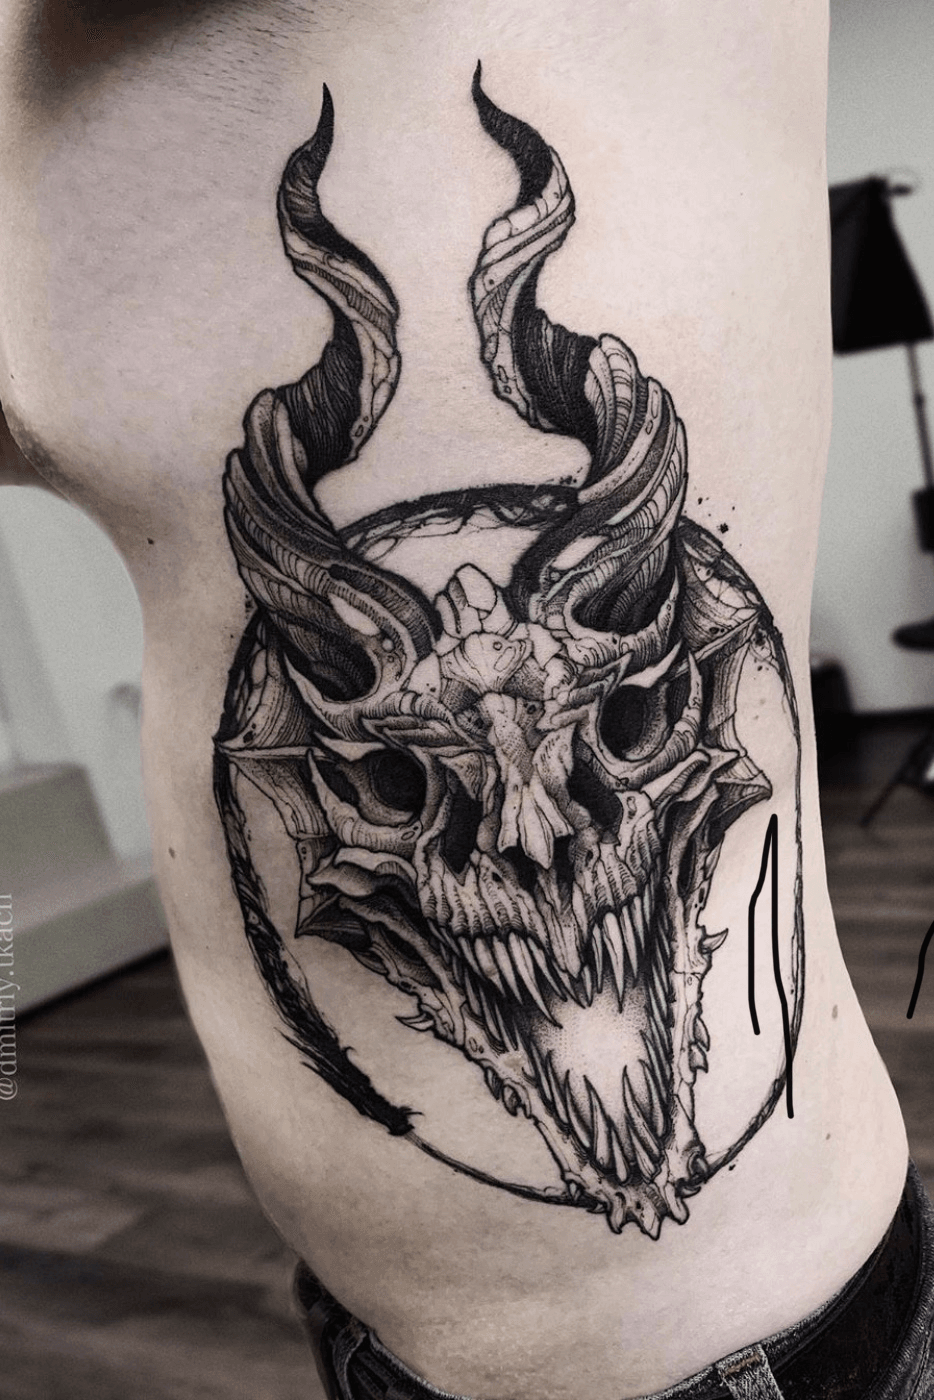 Snake skeleton Tattoo by Anastasia Blackwood Tattoo at Rude Bird Ink in  Hoechst Germany  rtattoo